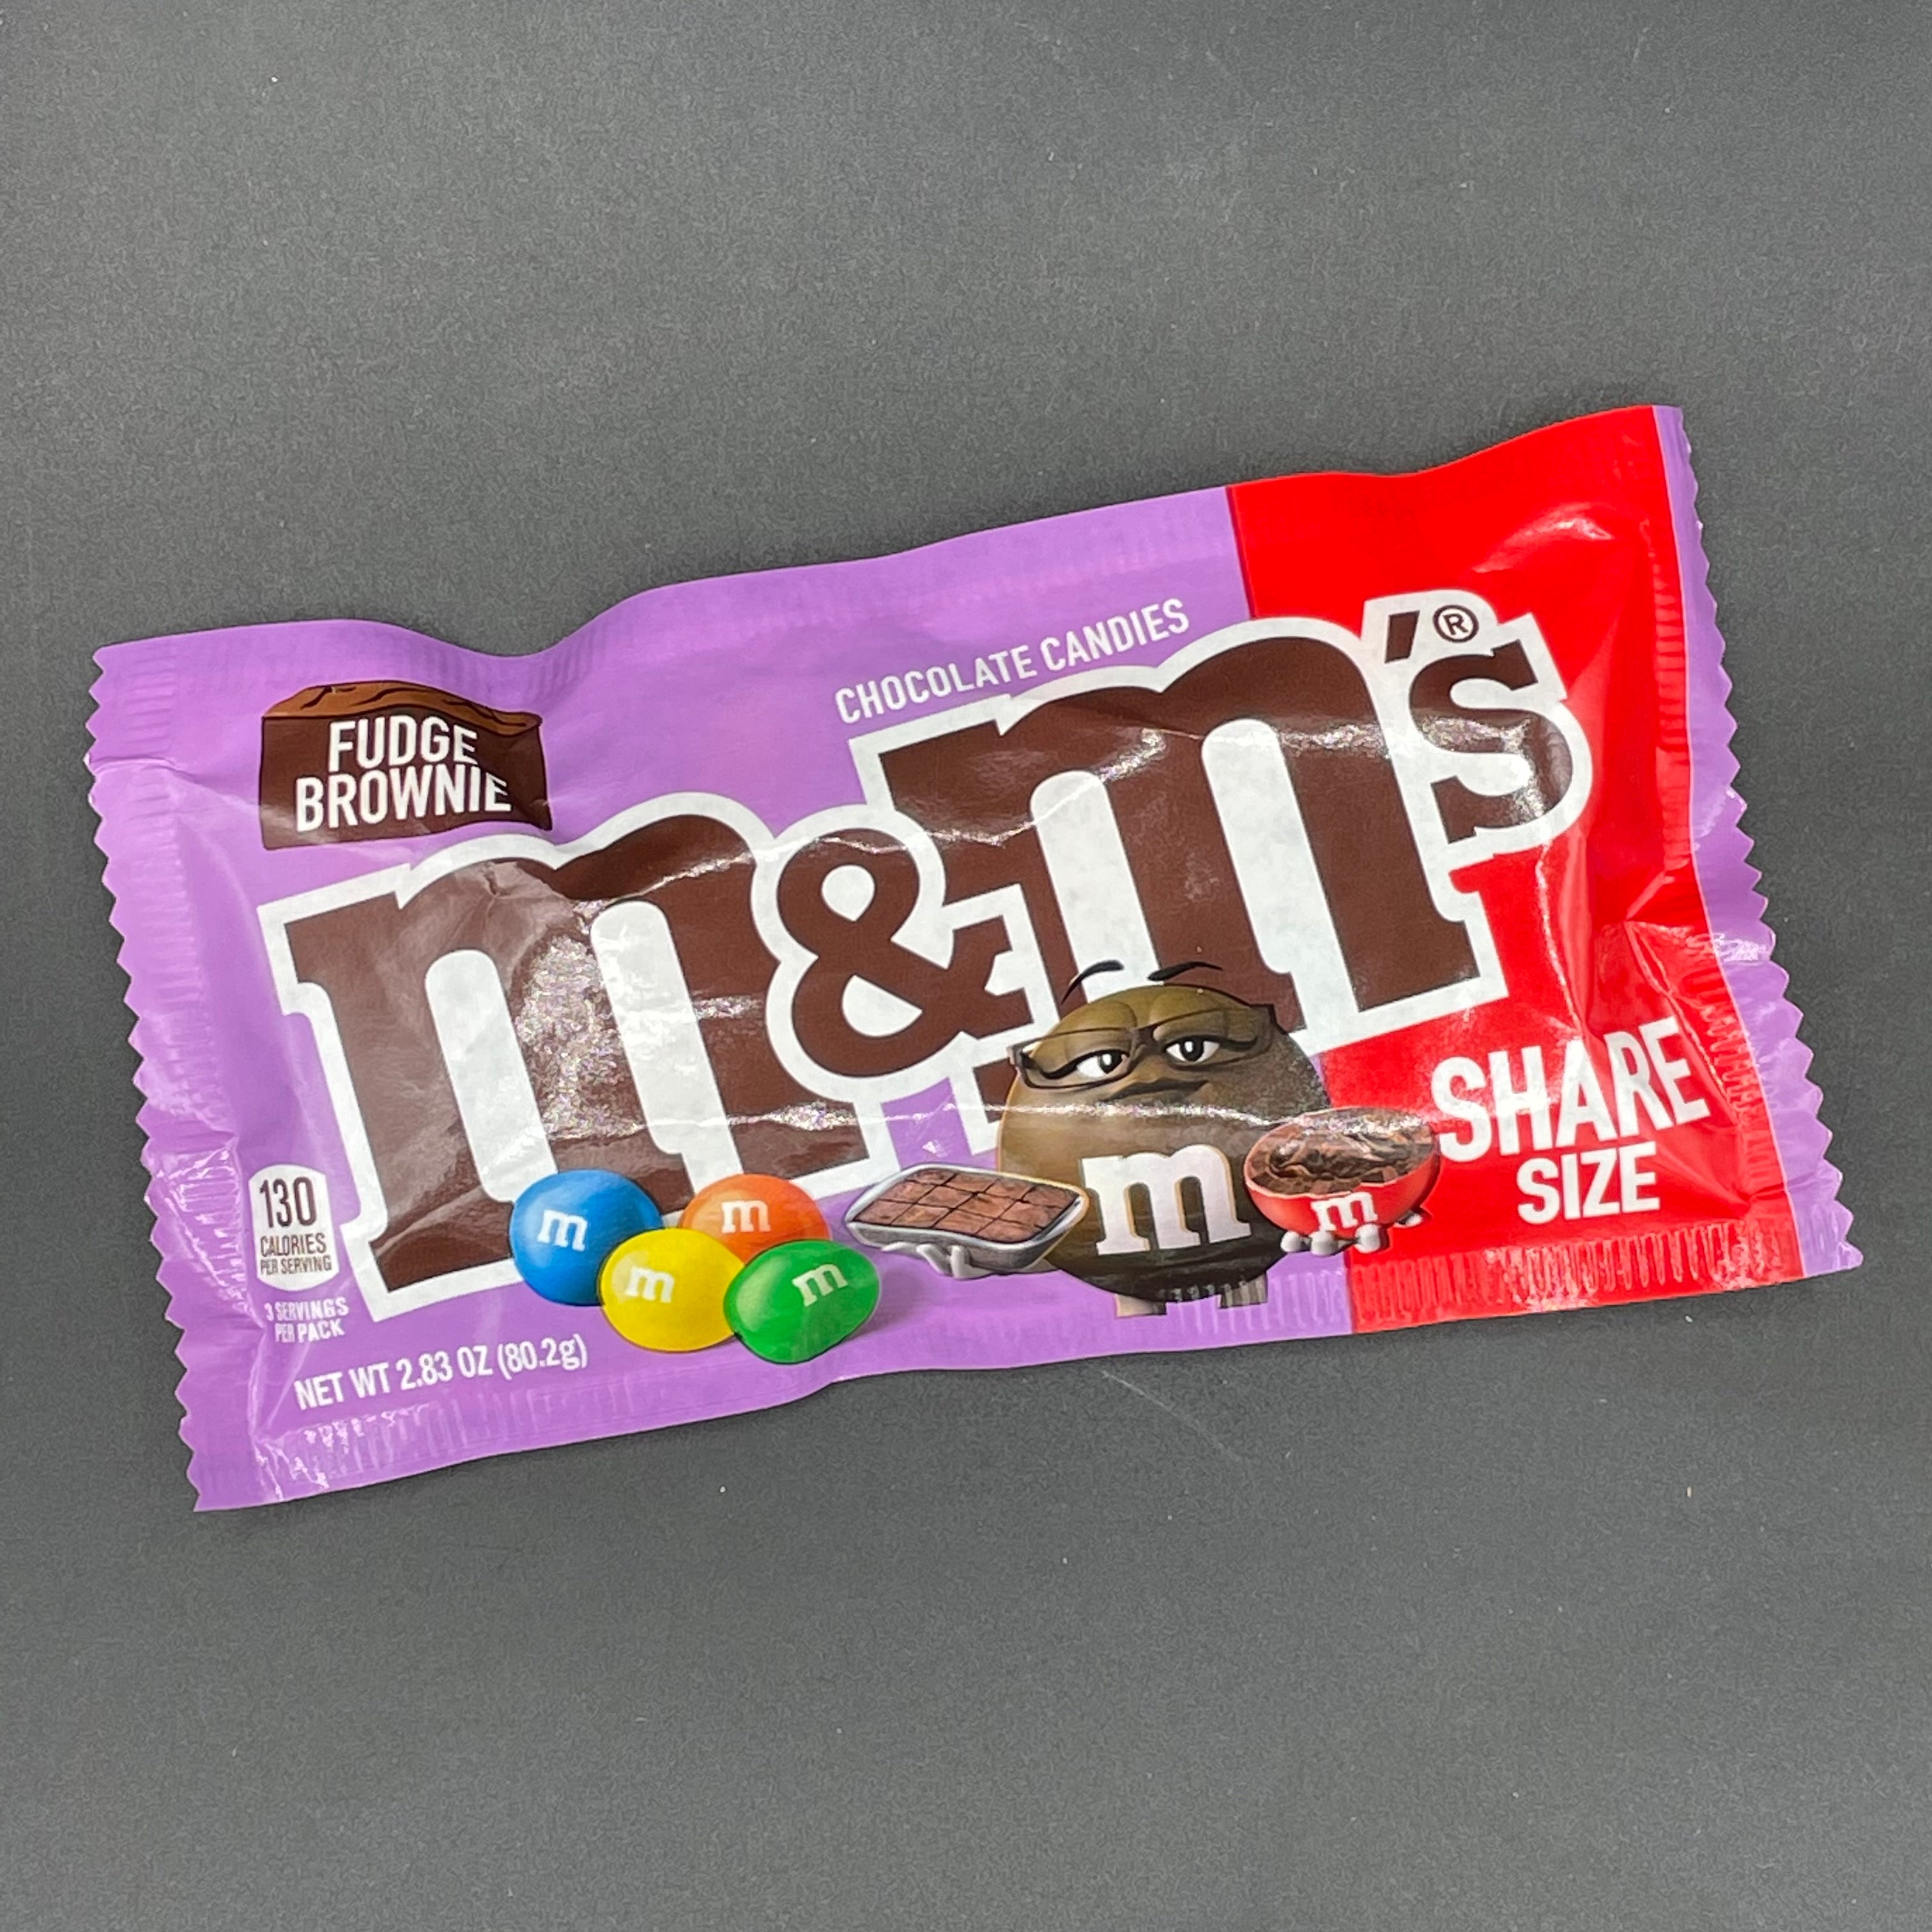 M&M'S Fudge Brownie Share Size, 2.83oz